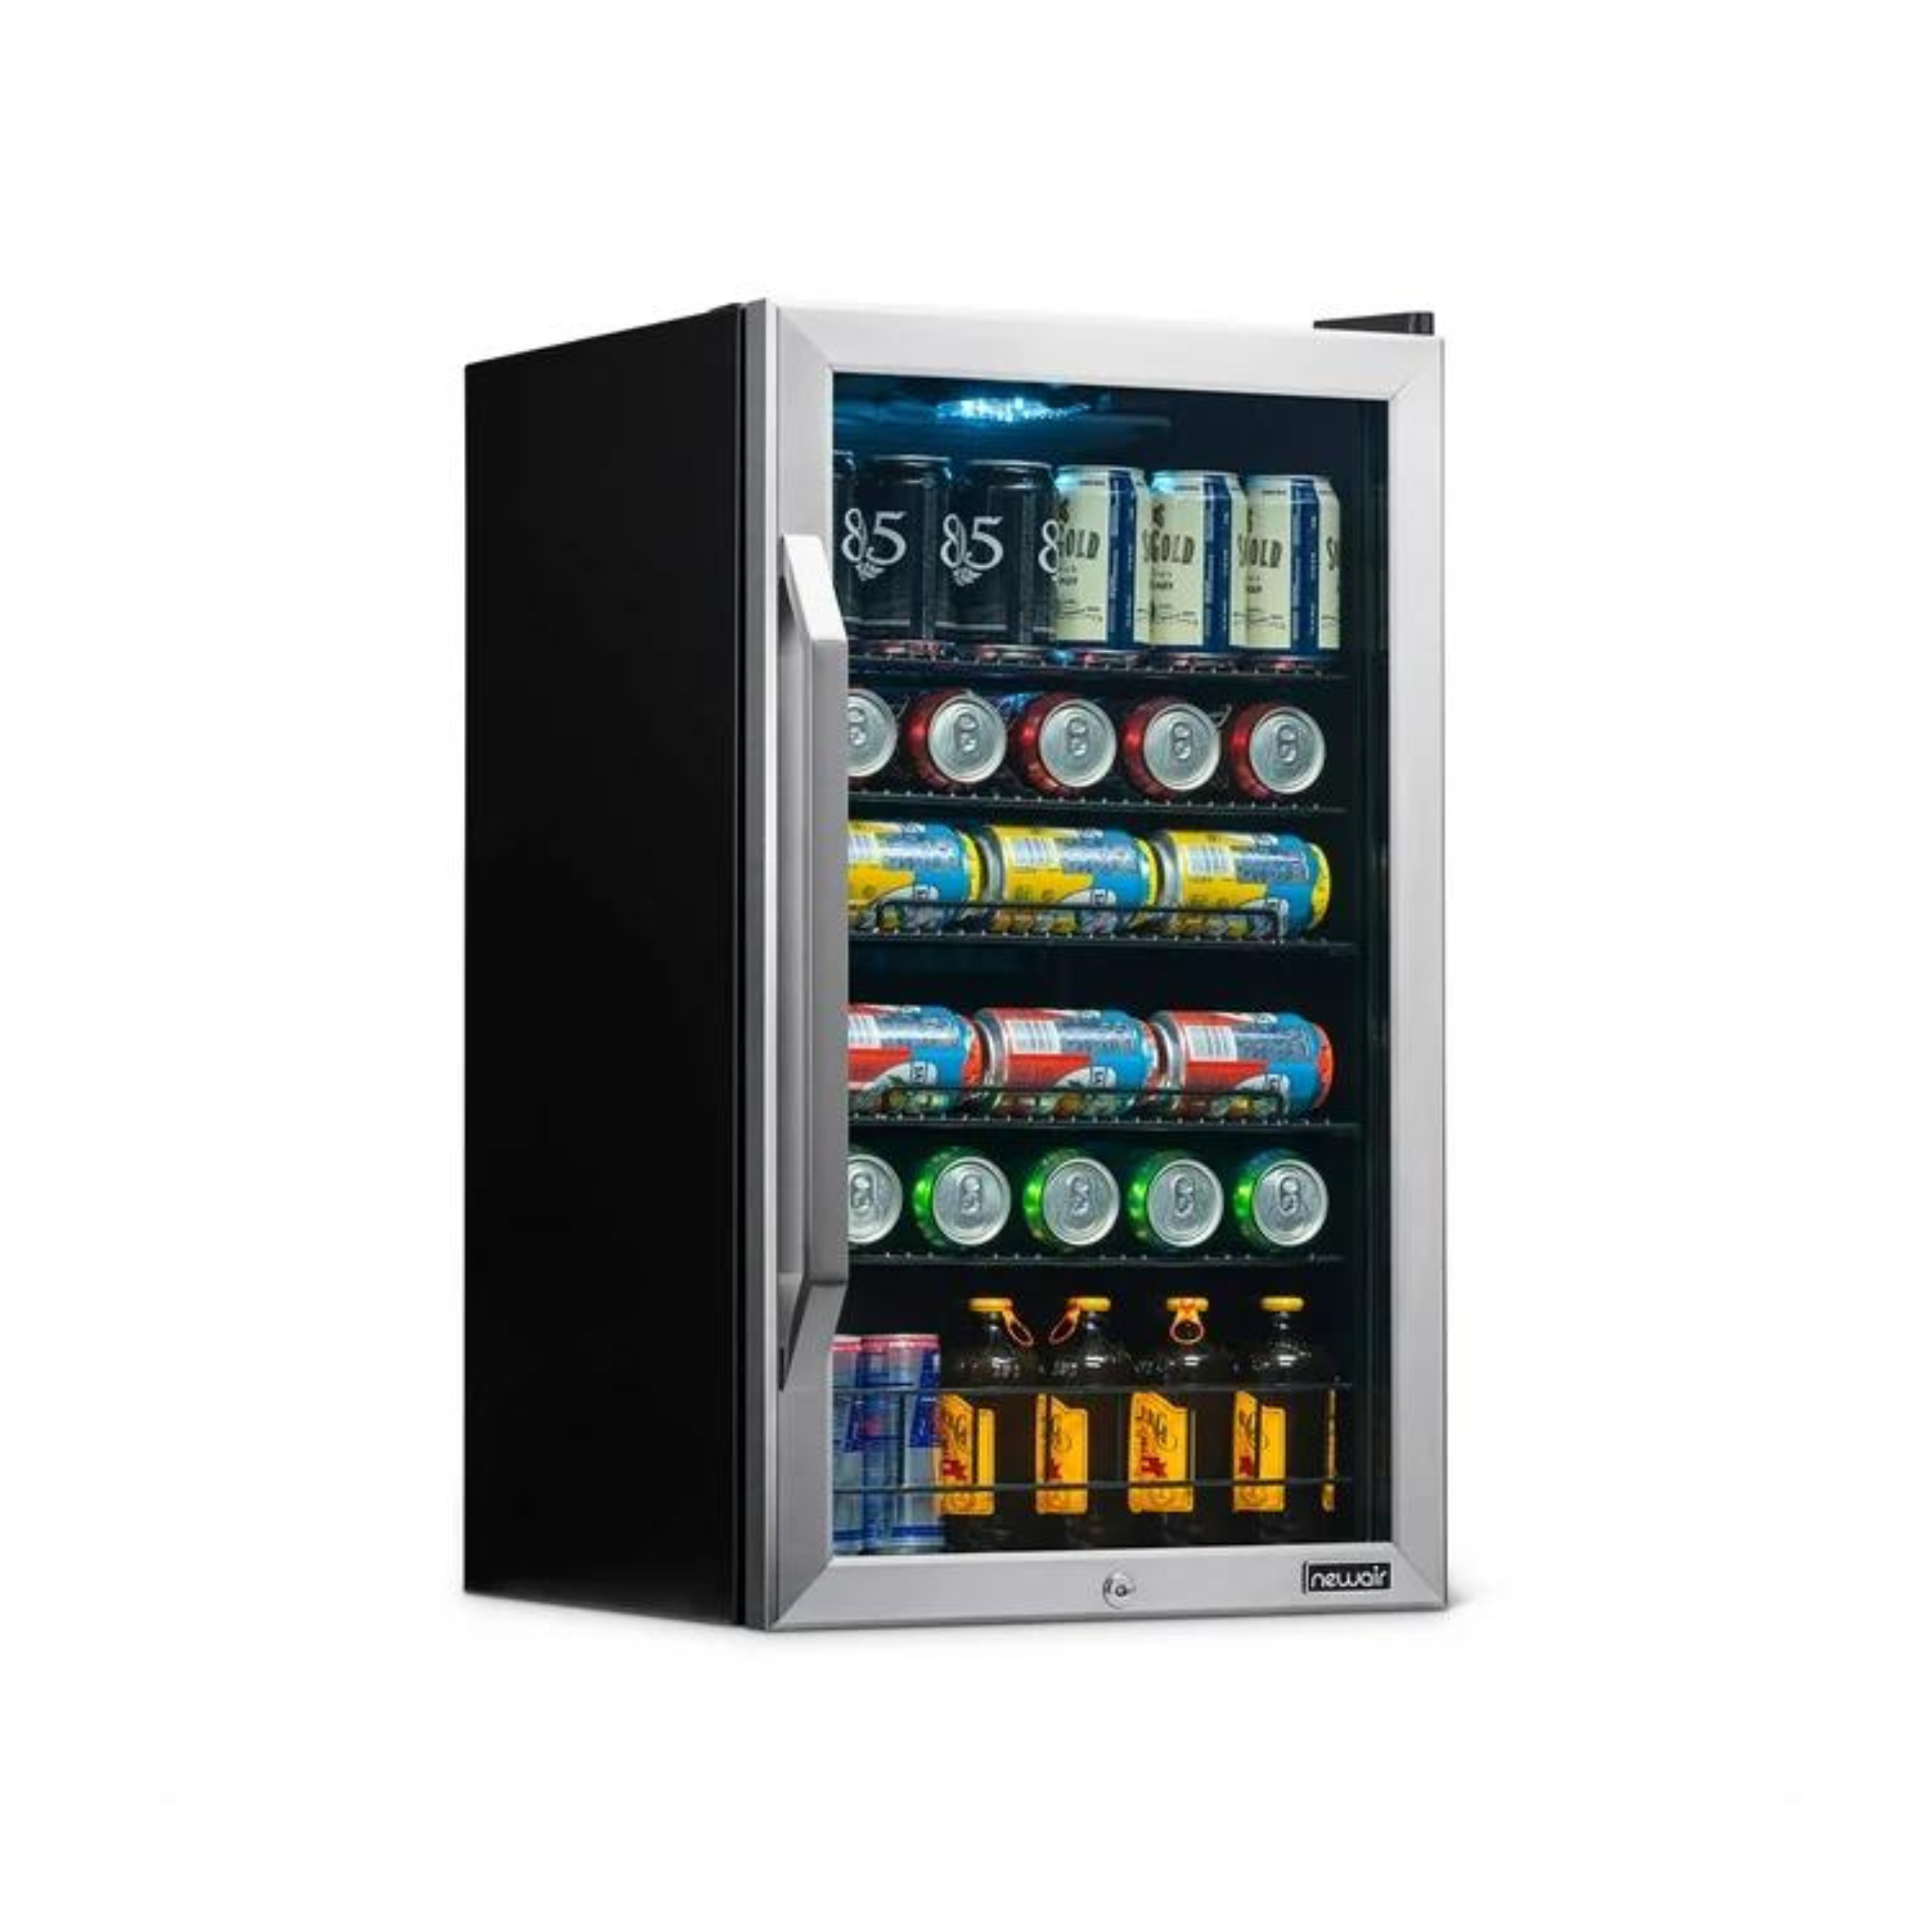 Newair 126-Can Beverage Refrigerator Cooler w/ Glass Door (Stainless Steel)